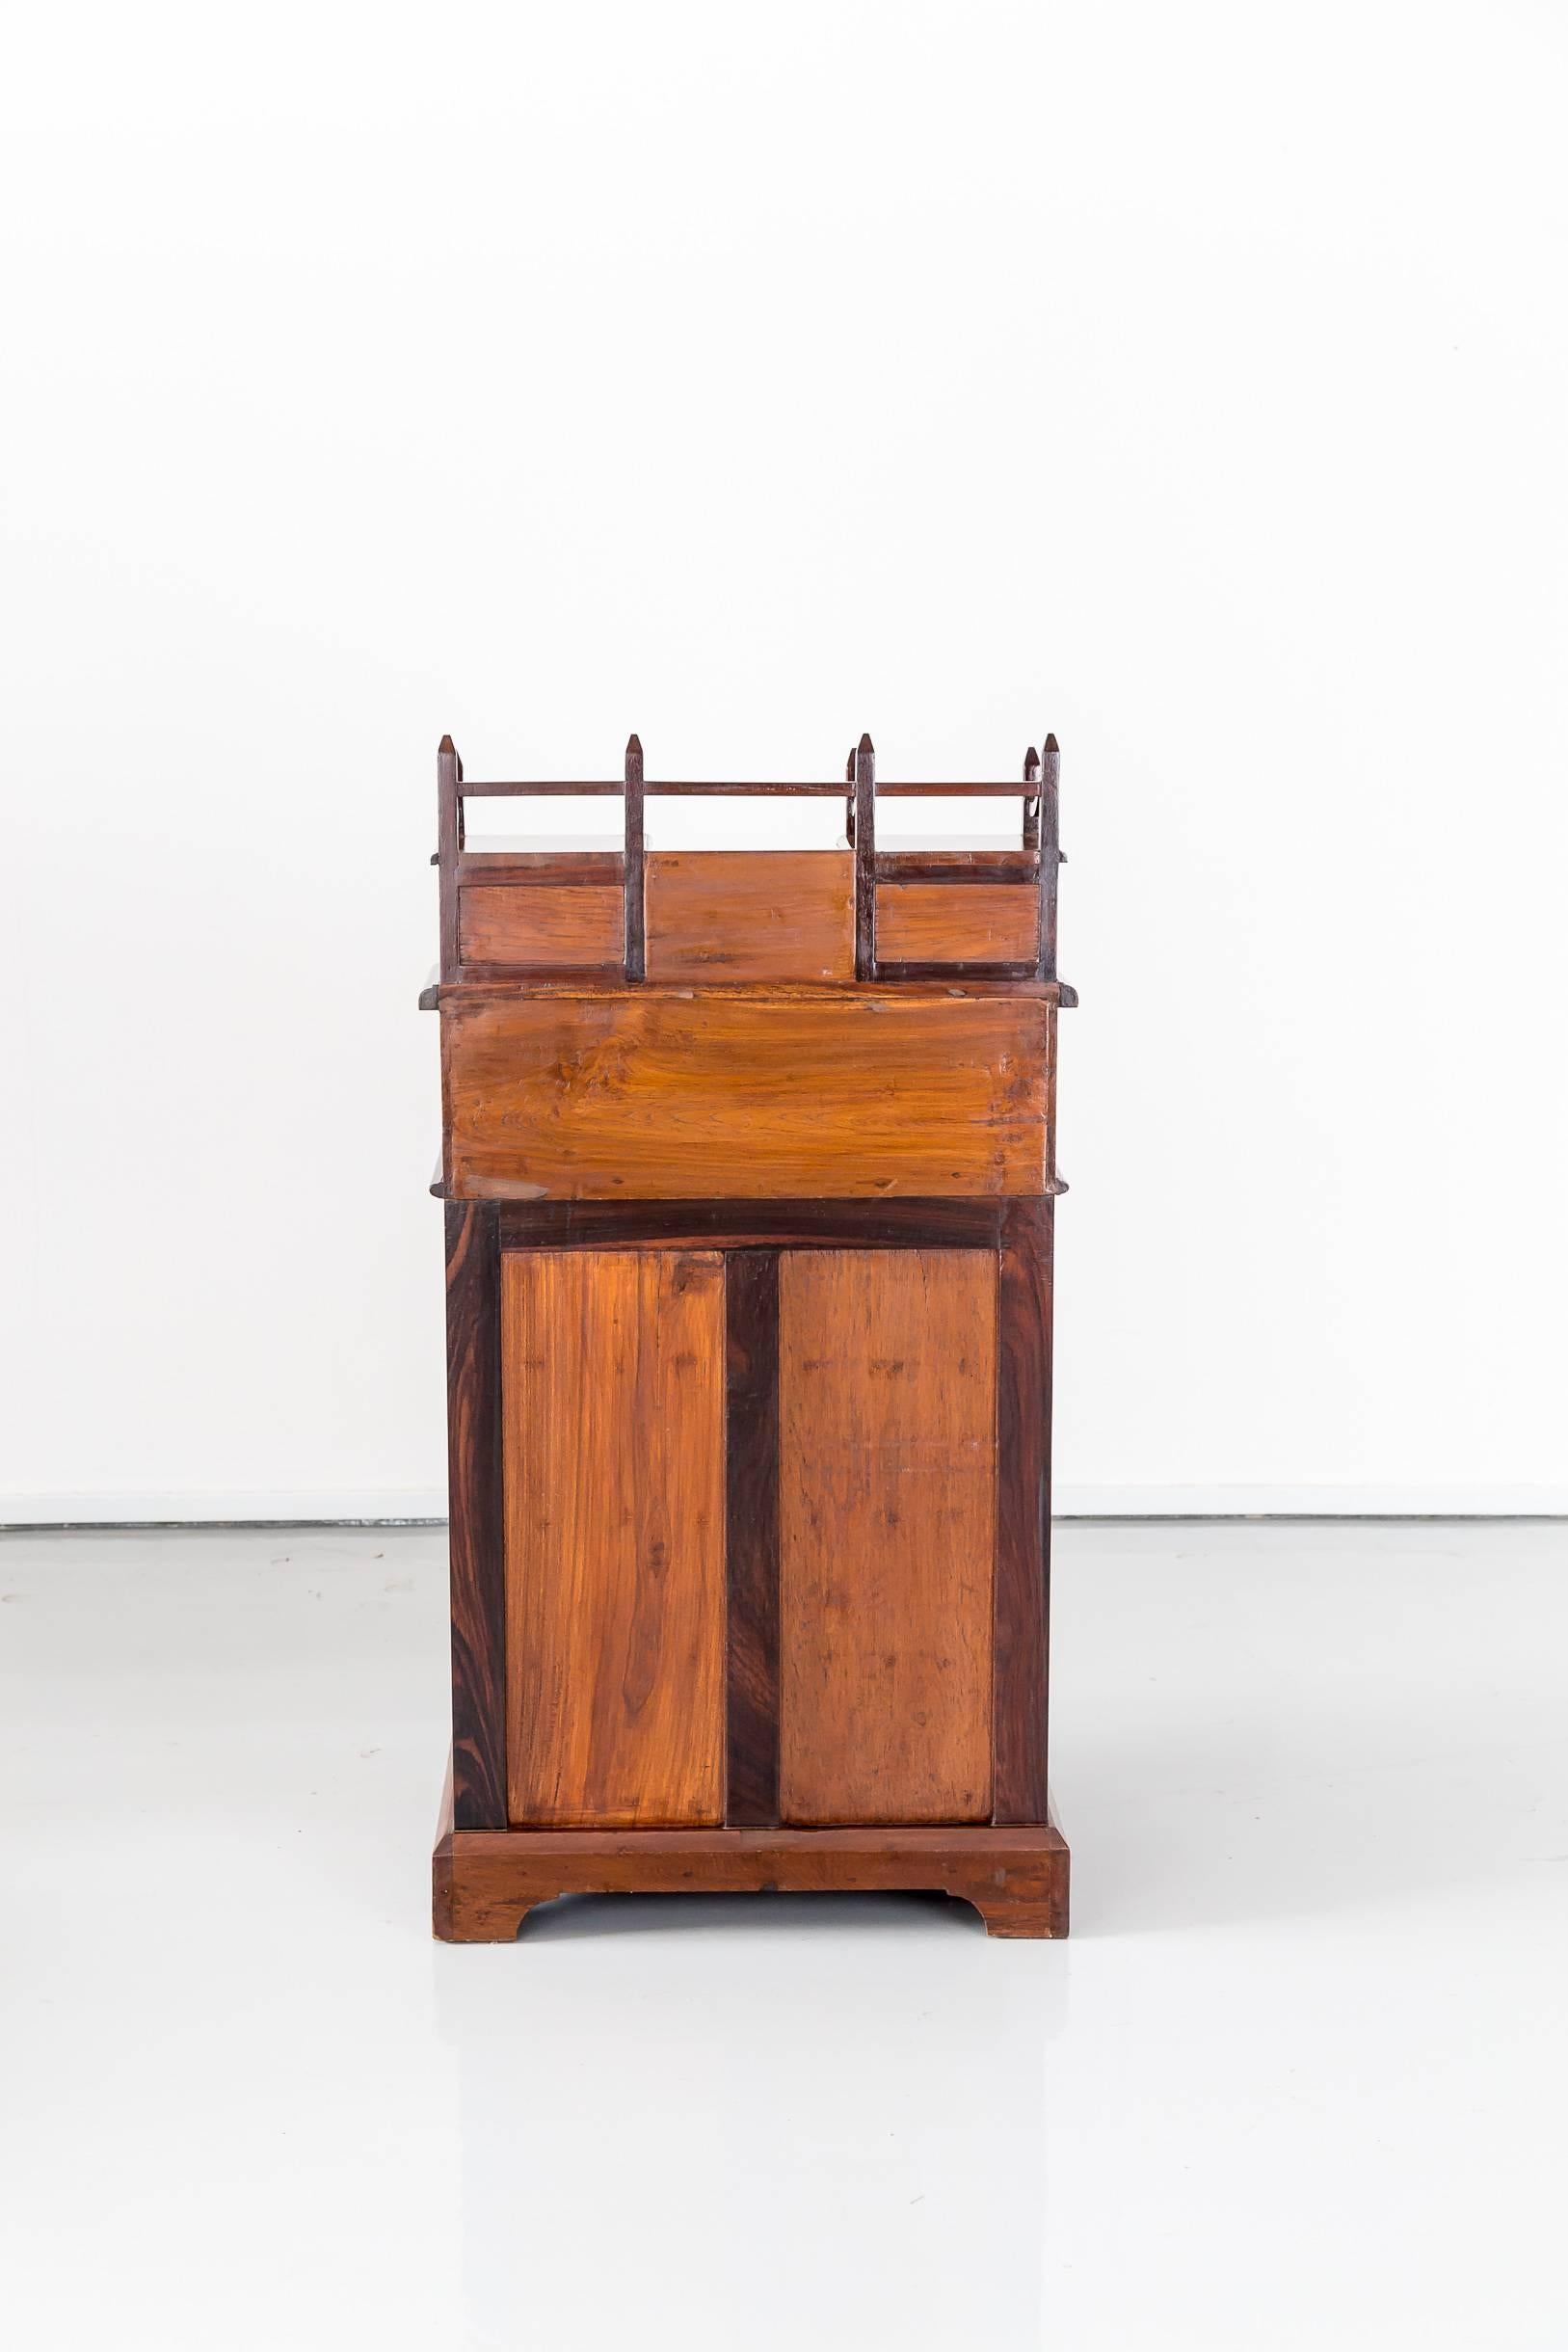 Antique Anglo-Indian or British Colonial Teakwood Davenport Desk For Sale 6